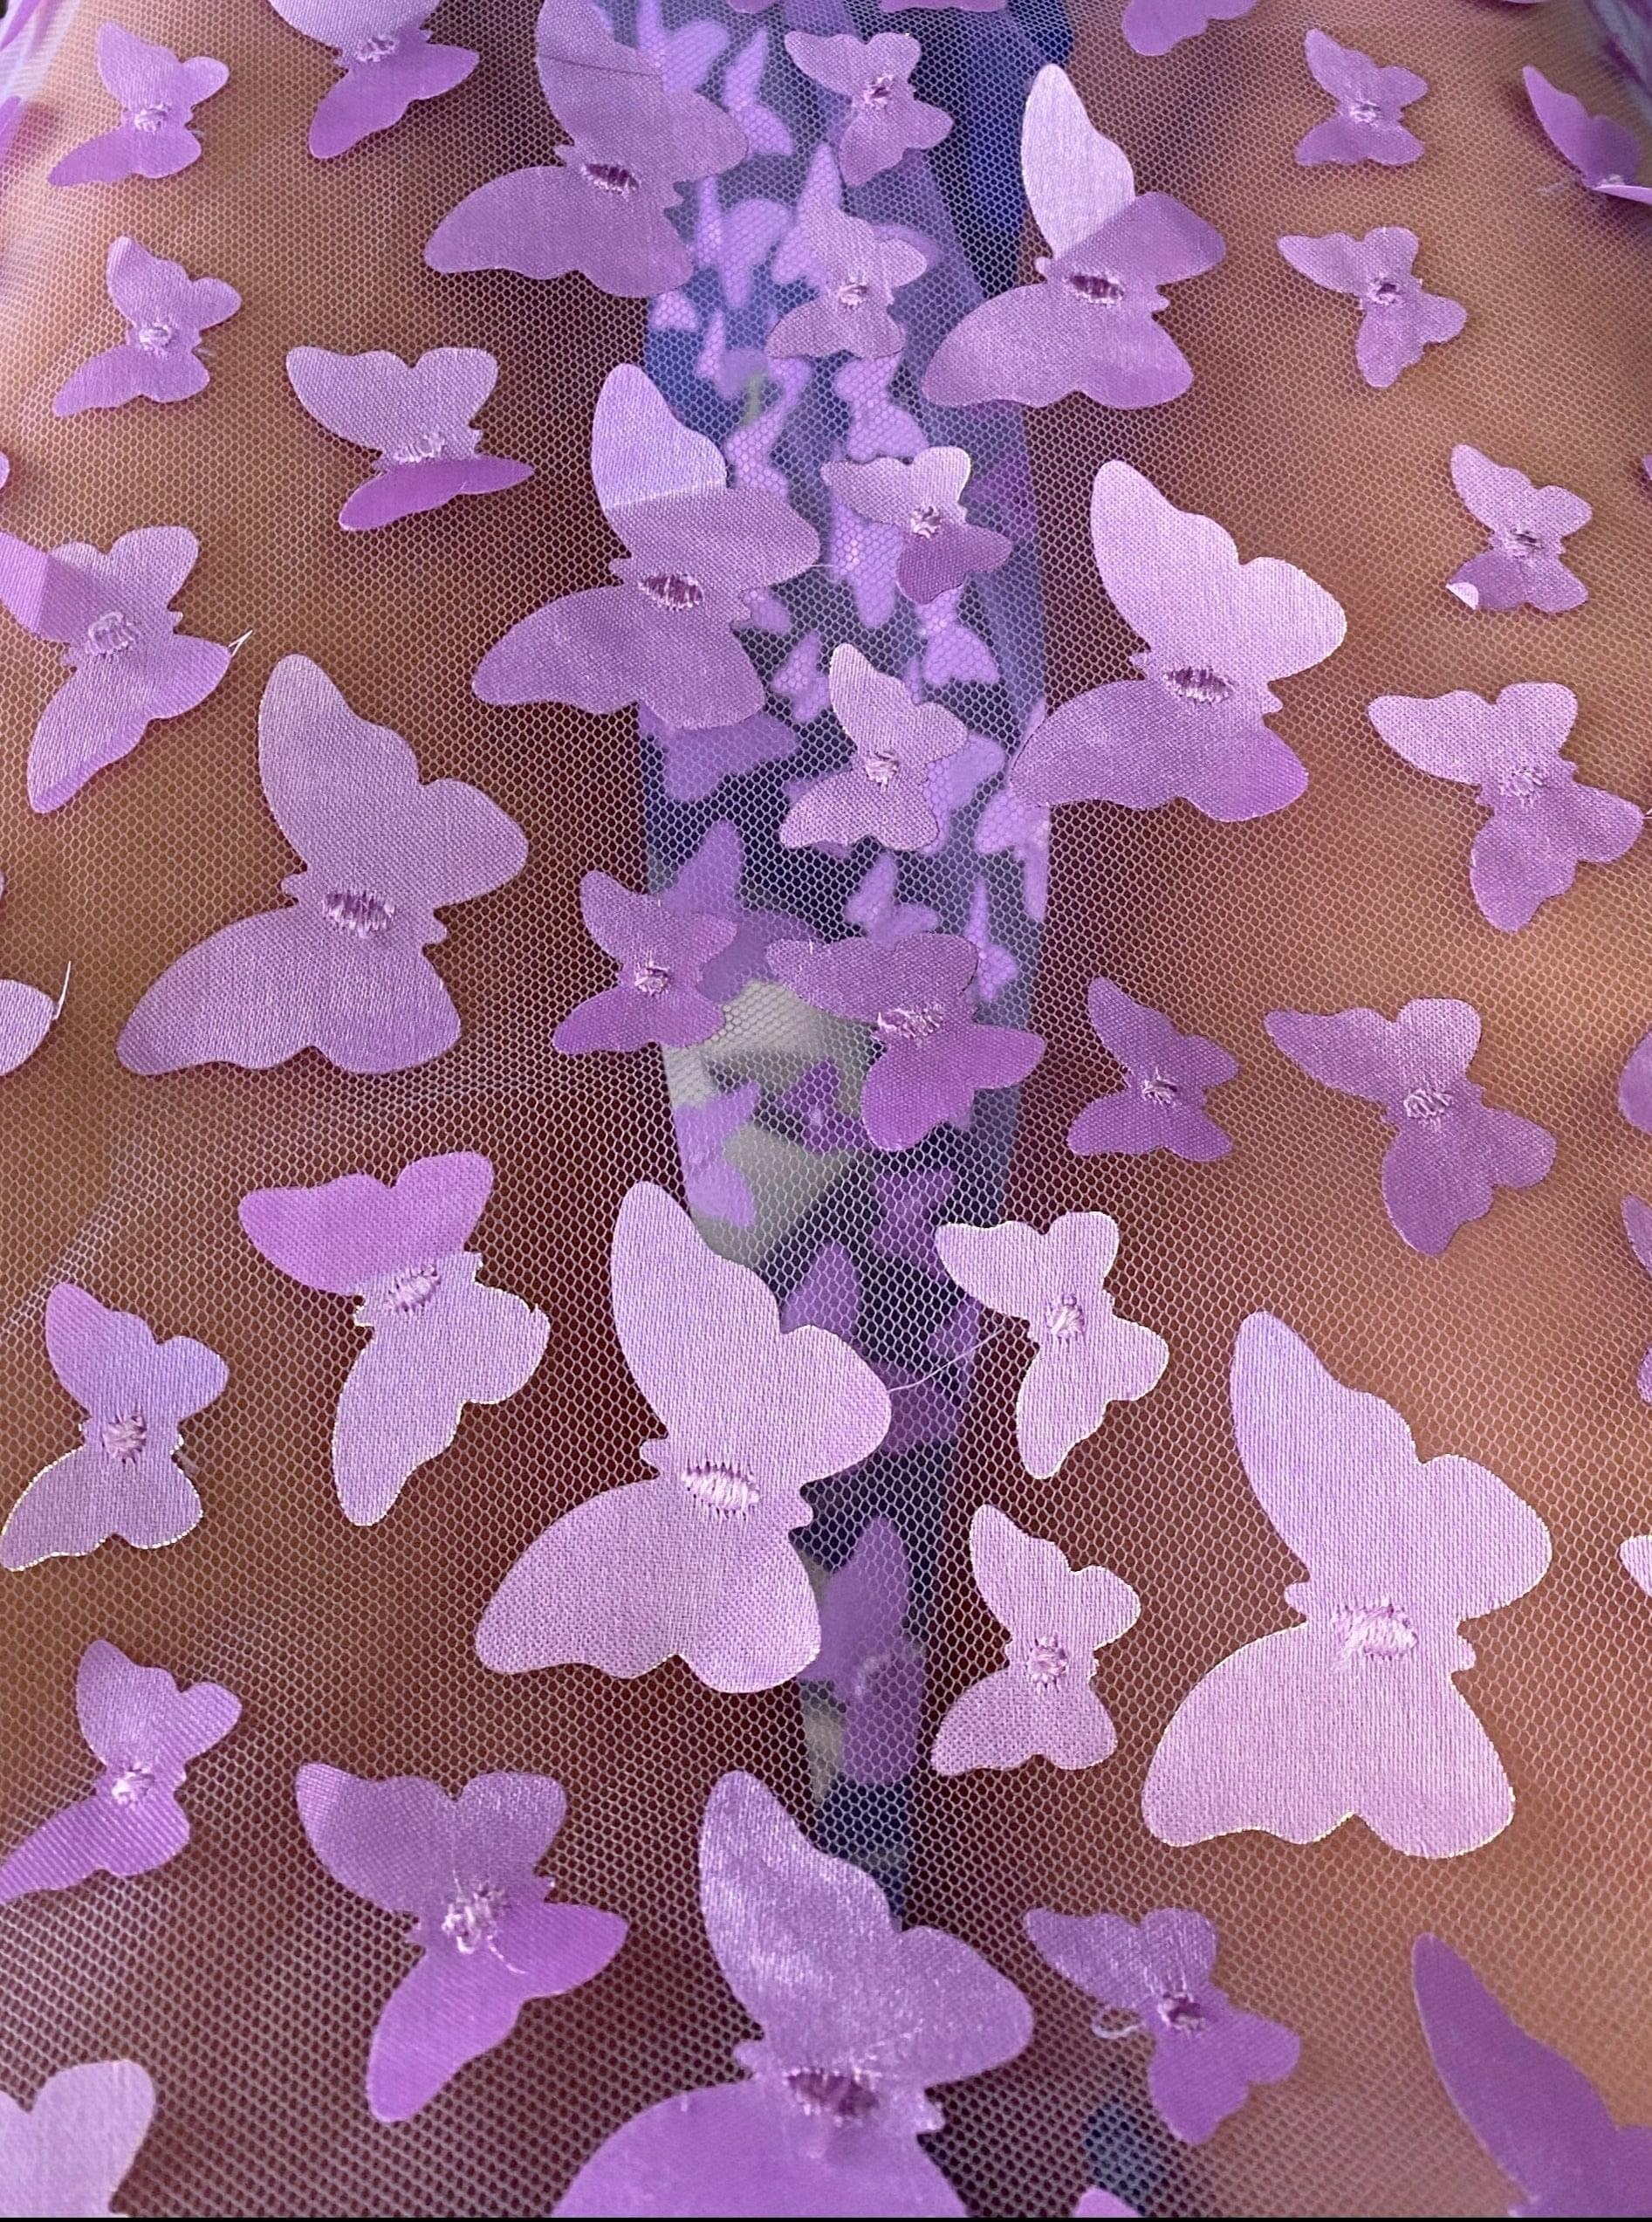 3D Lavender Butterfly Lace